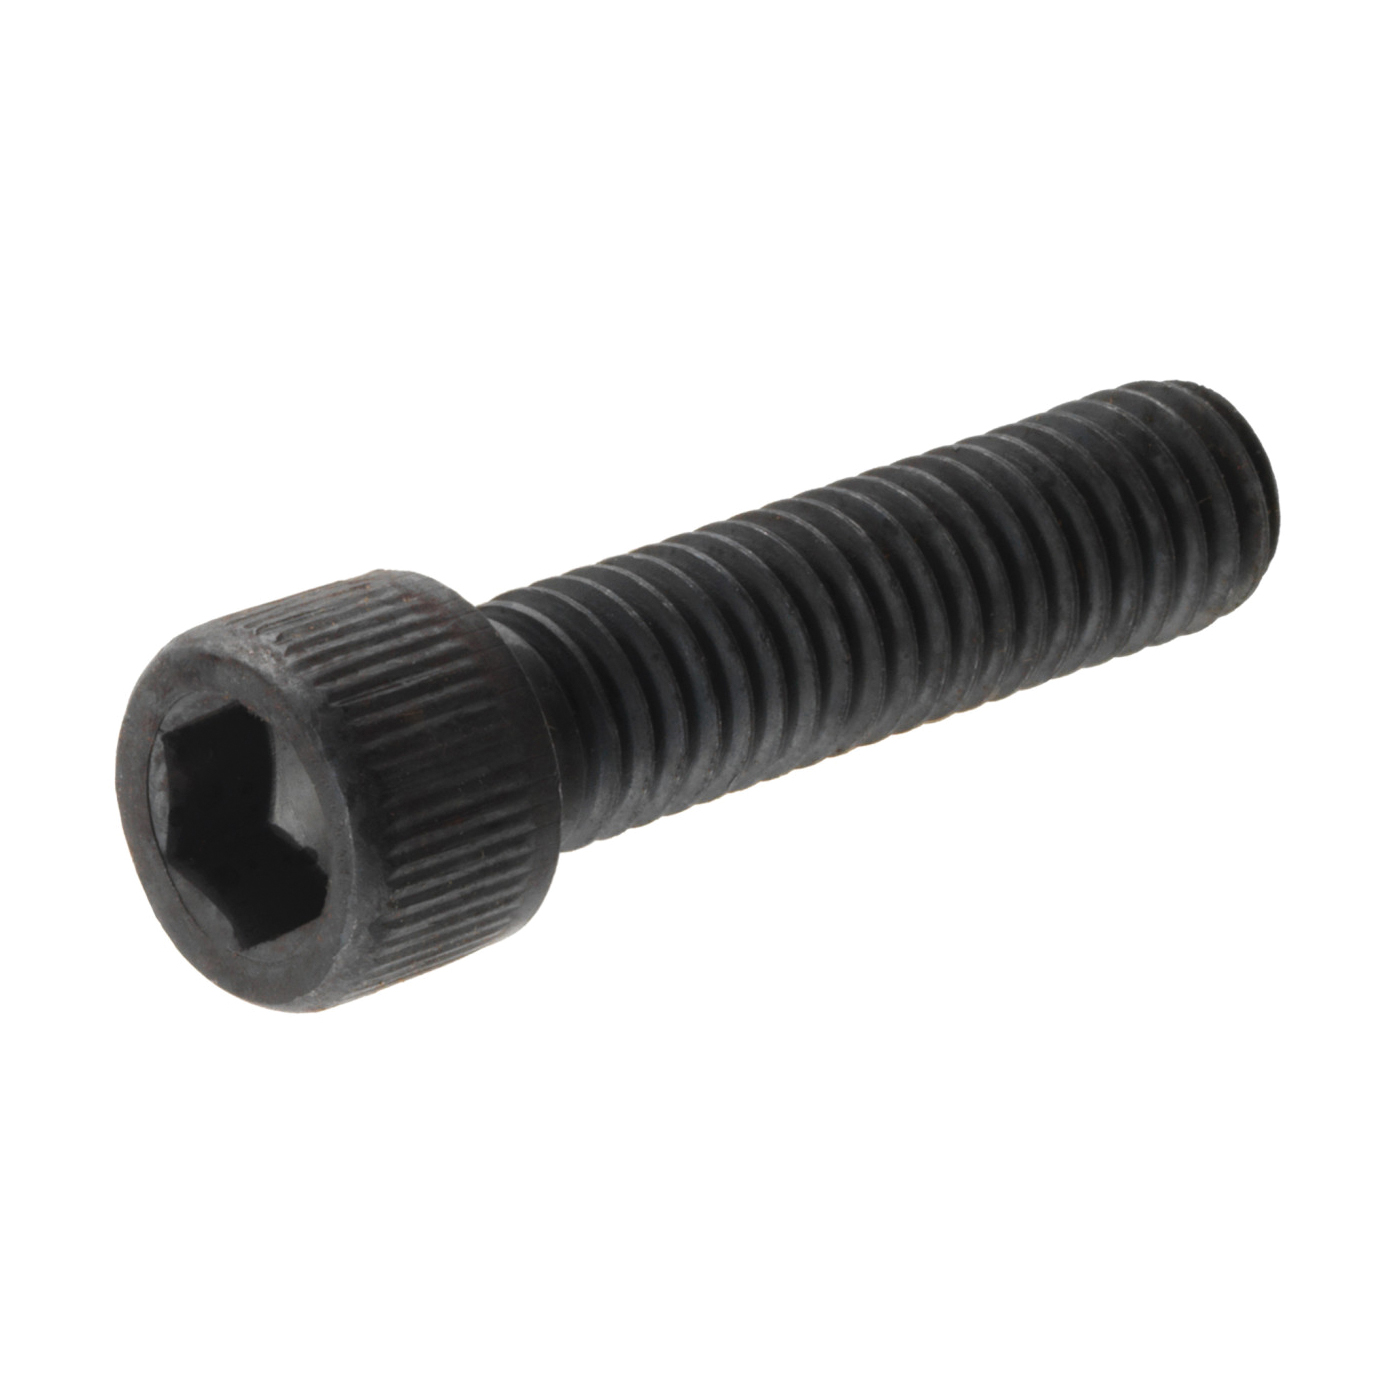 880330 Screw, 3/8-16 Thread, 1 in L, Coarse Thread, Socket Drive, Blunt Point, Steel, Black Phosphate, 2 PK